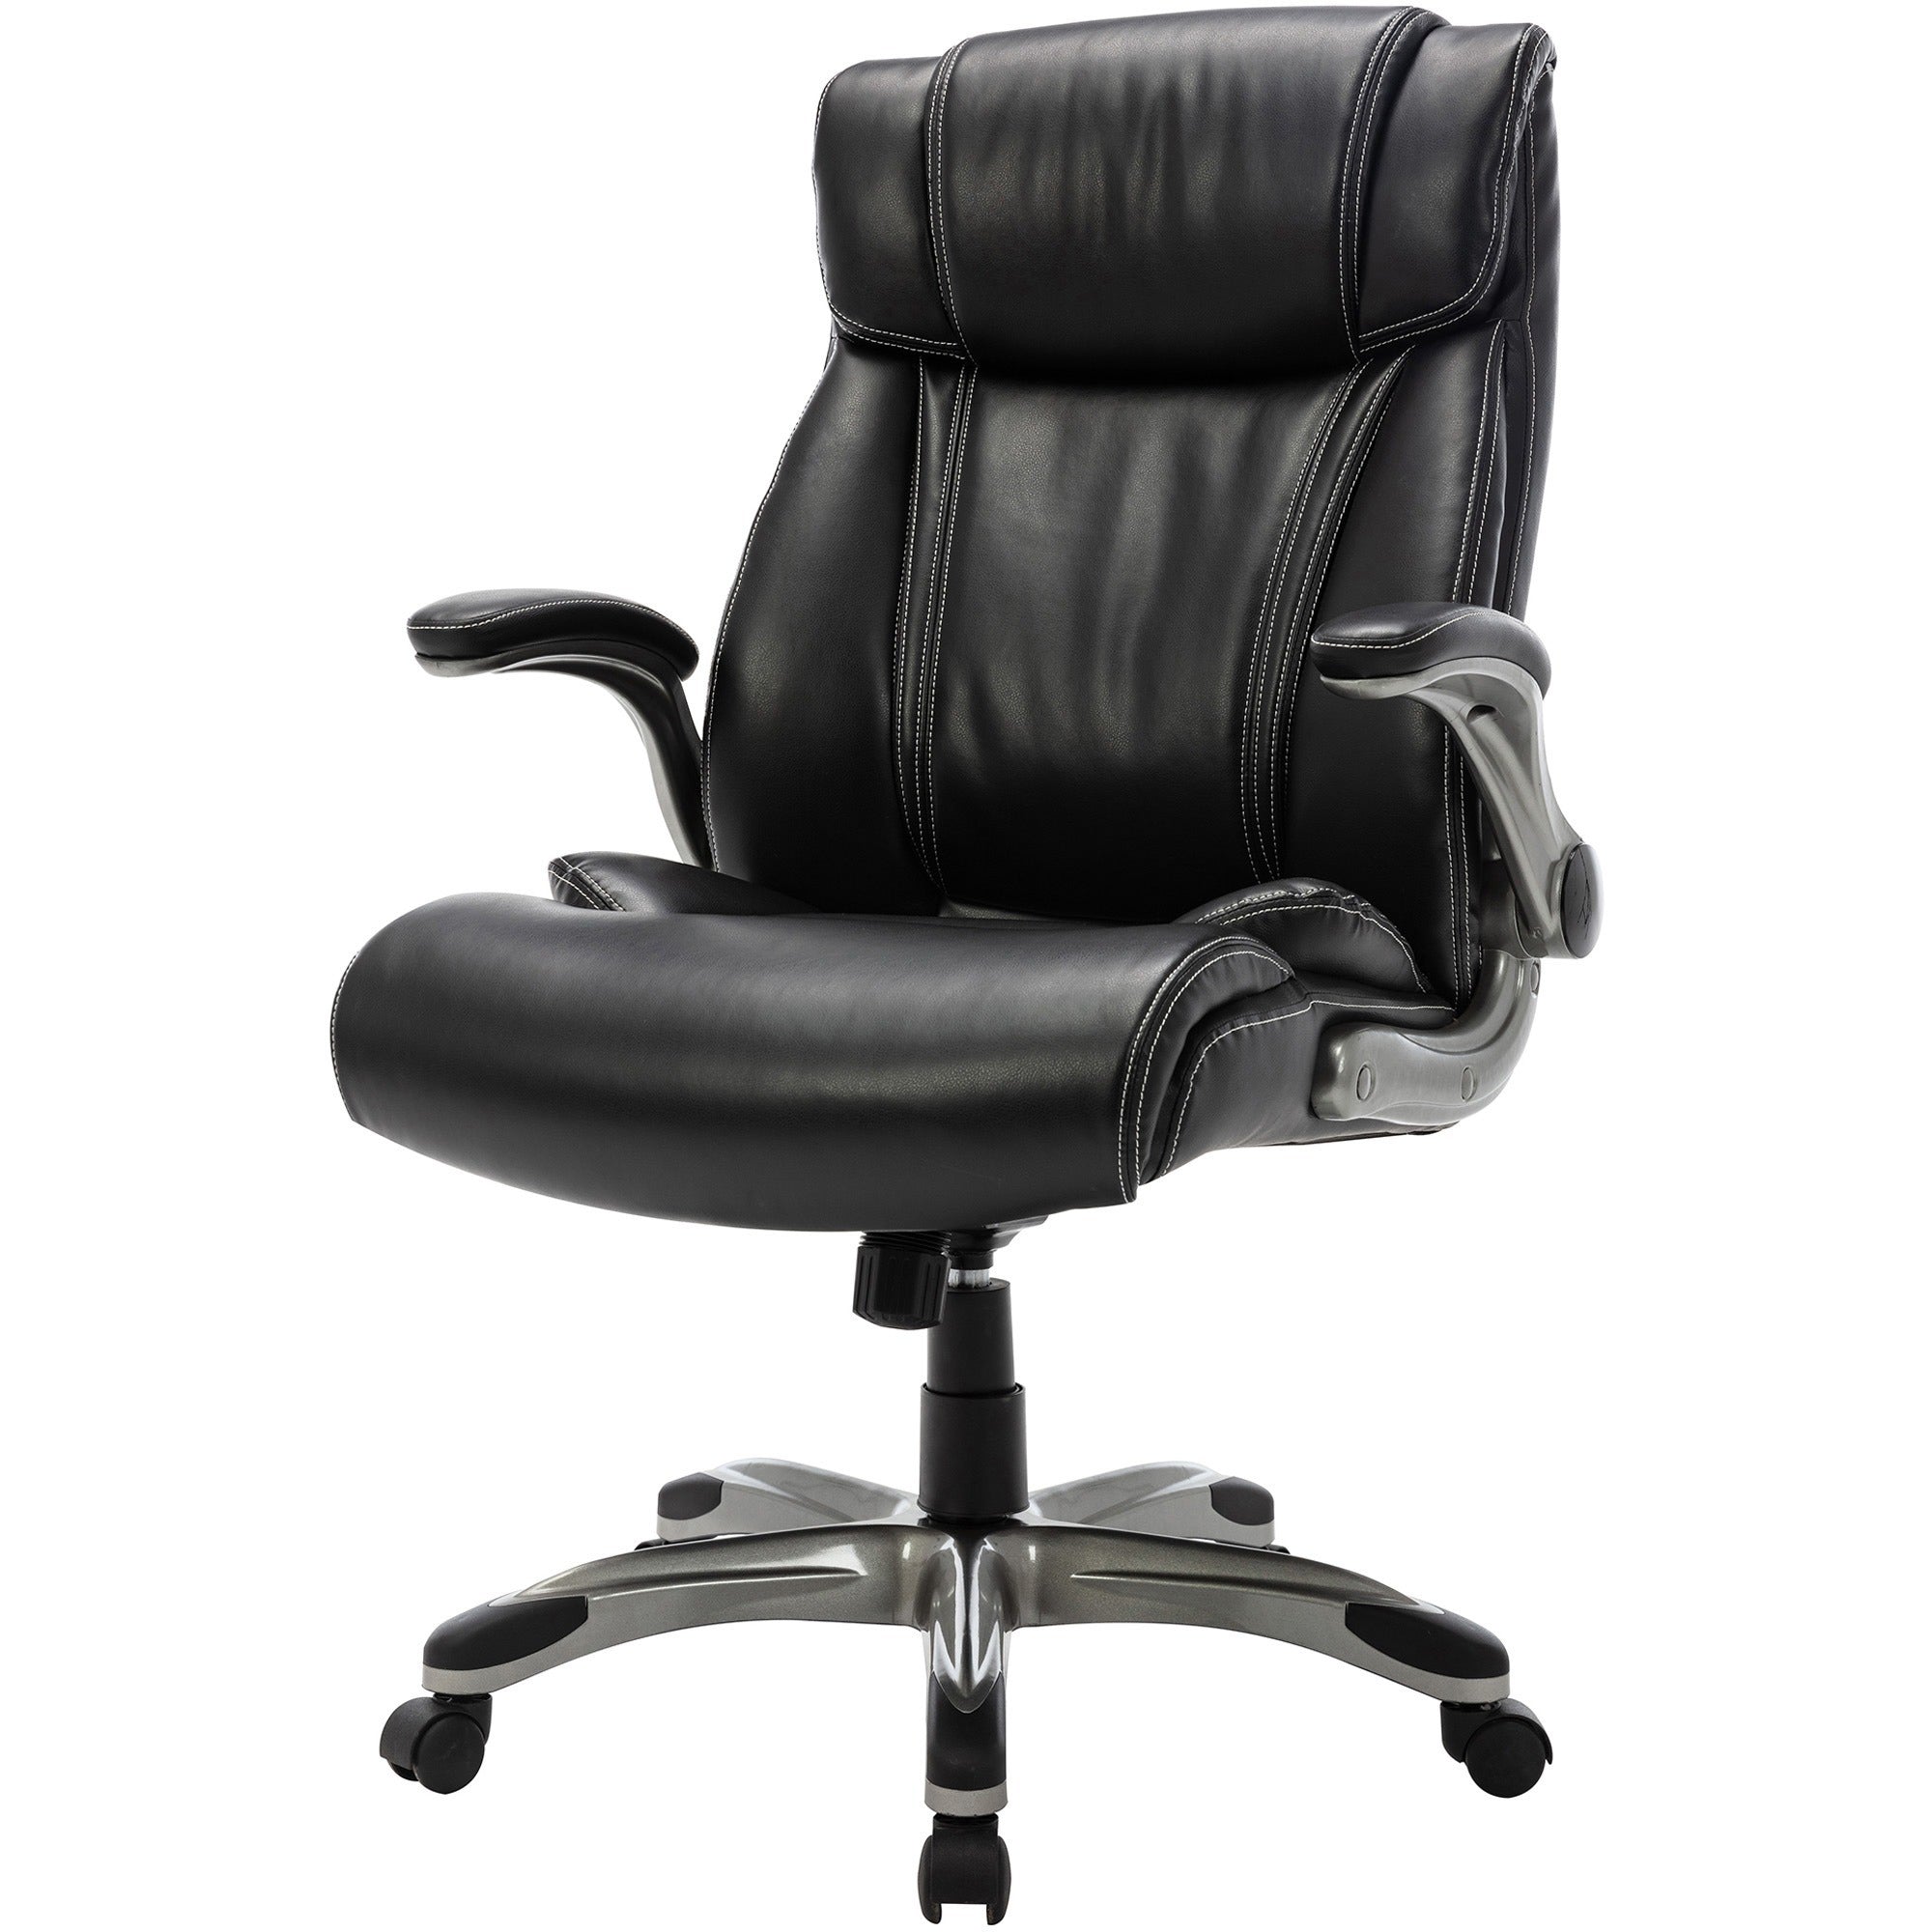 soho-high-back-office-chair-flip-with-armrest-black-bonded-leather-seat-black-bonded-leather-back-high-back-5-star-base-armrest-1-each_llr81803 - 4